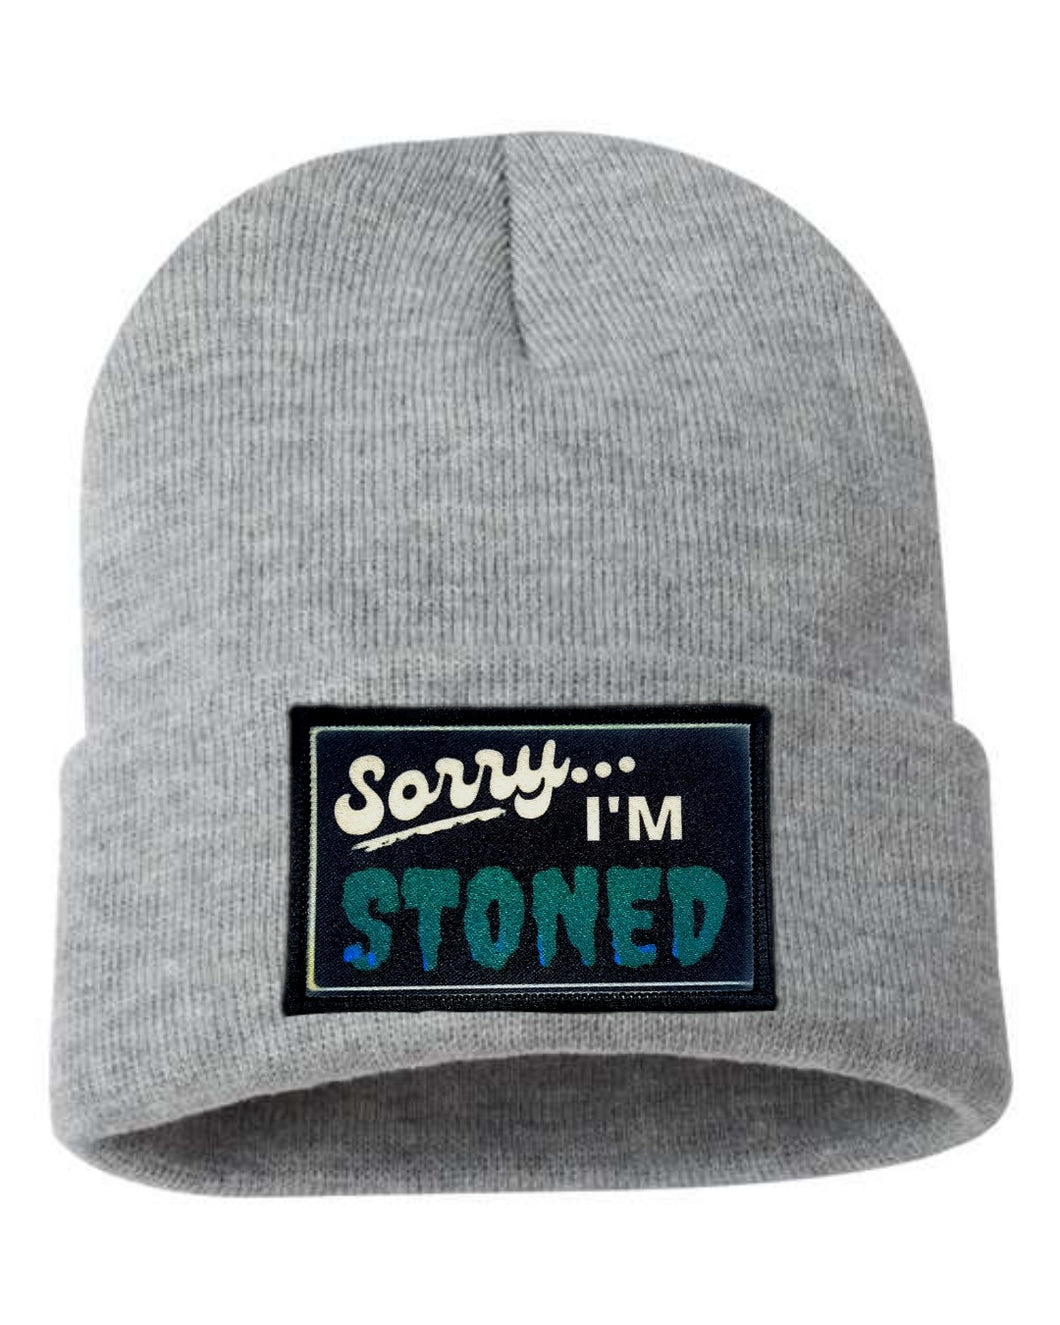 Sorry I'm stoned Beanie